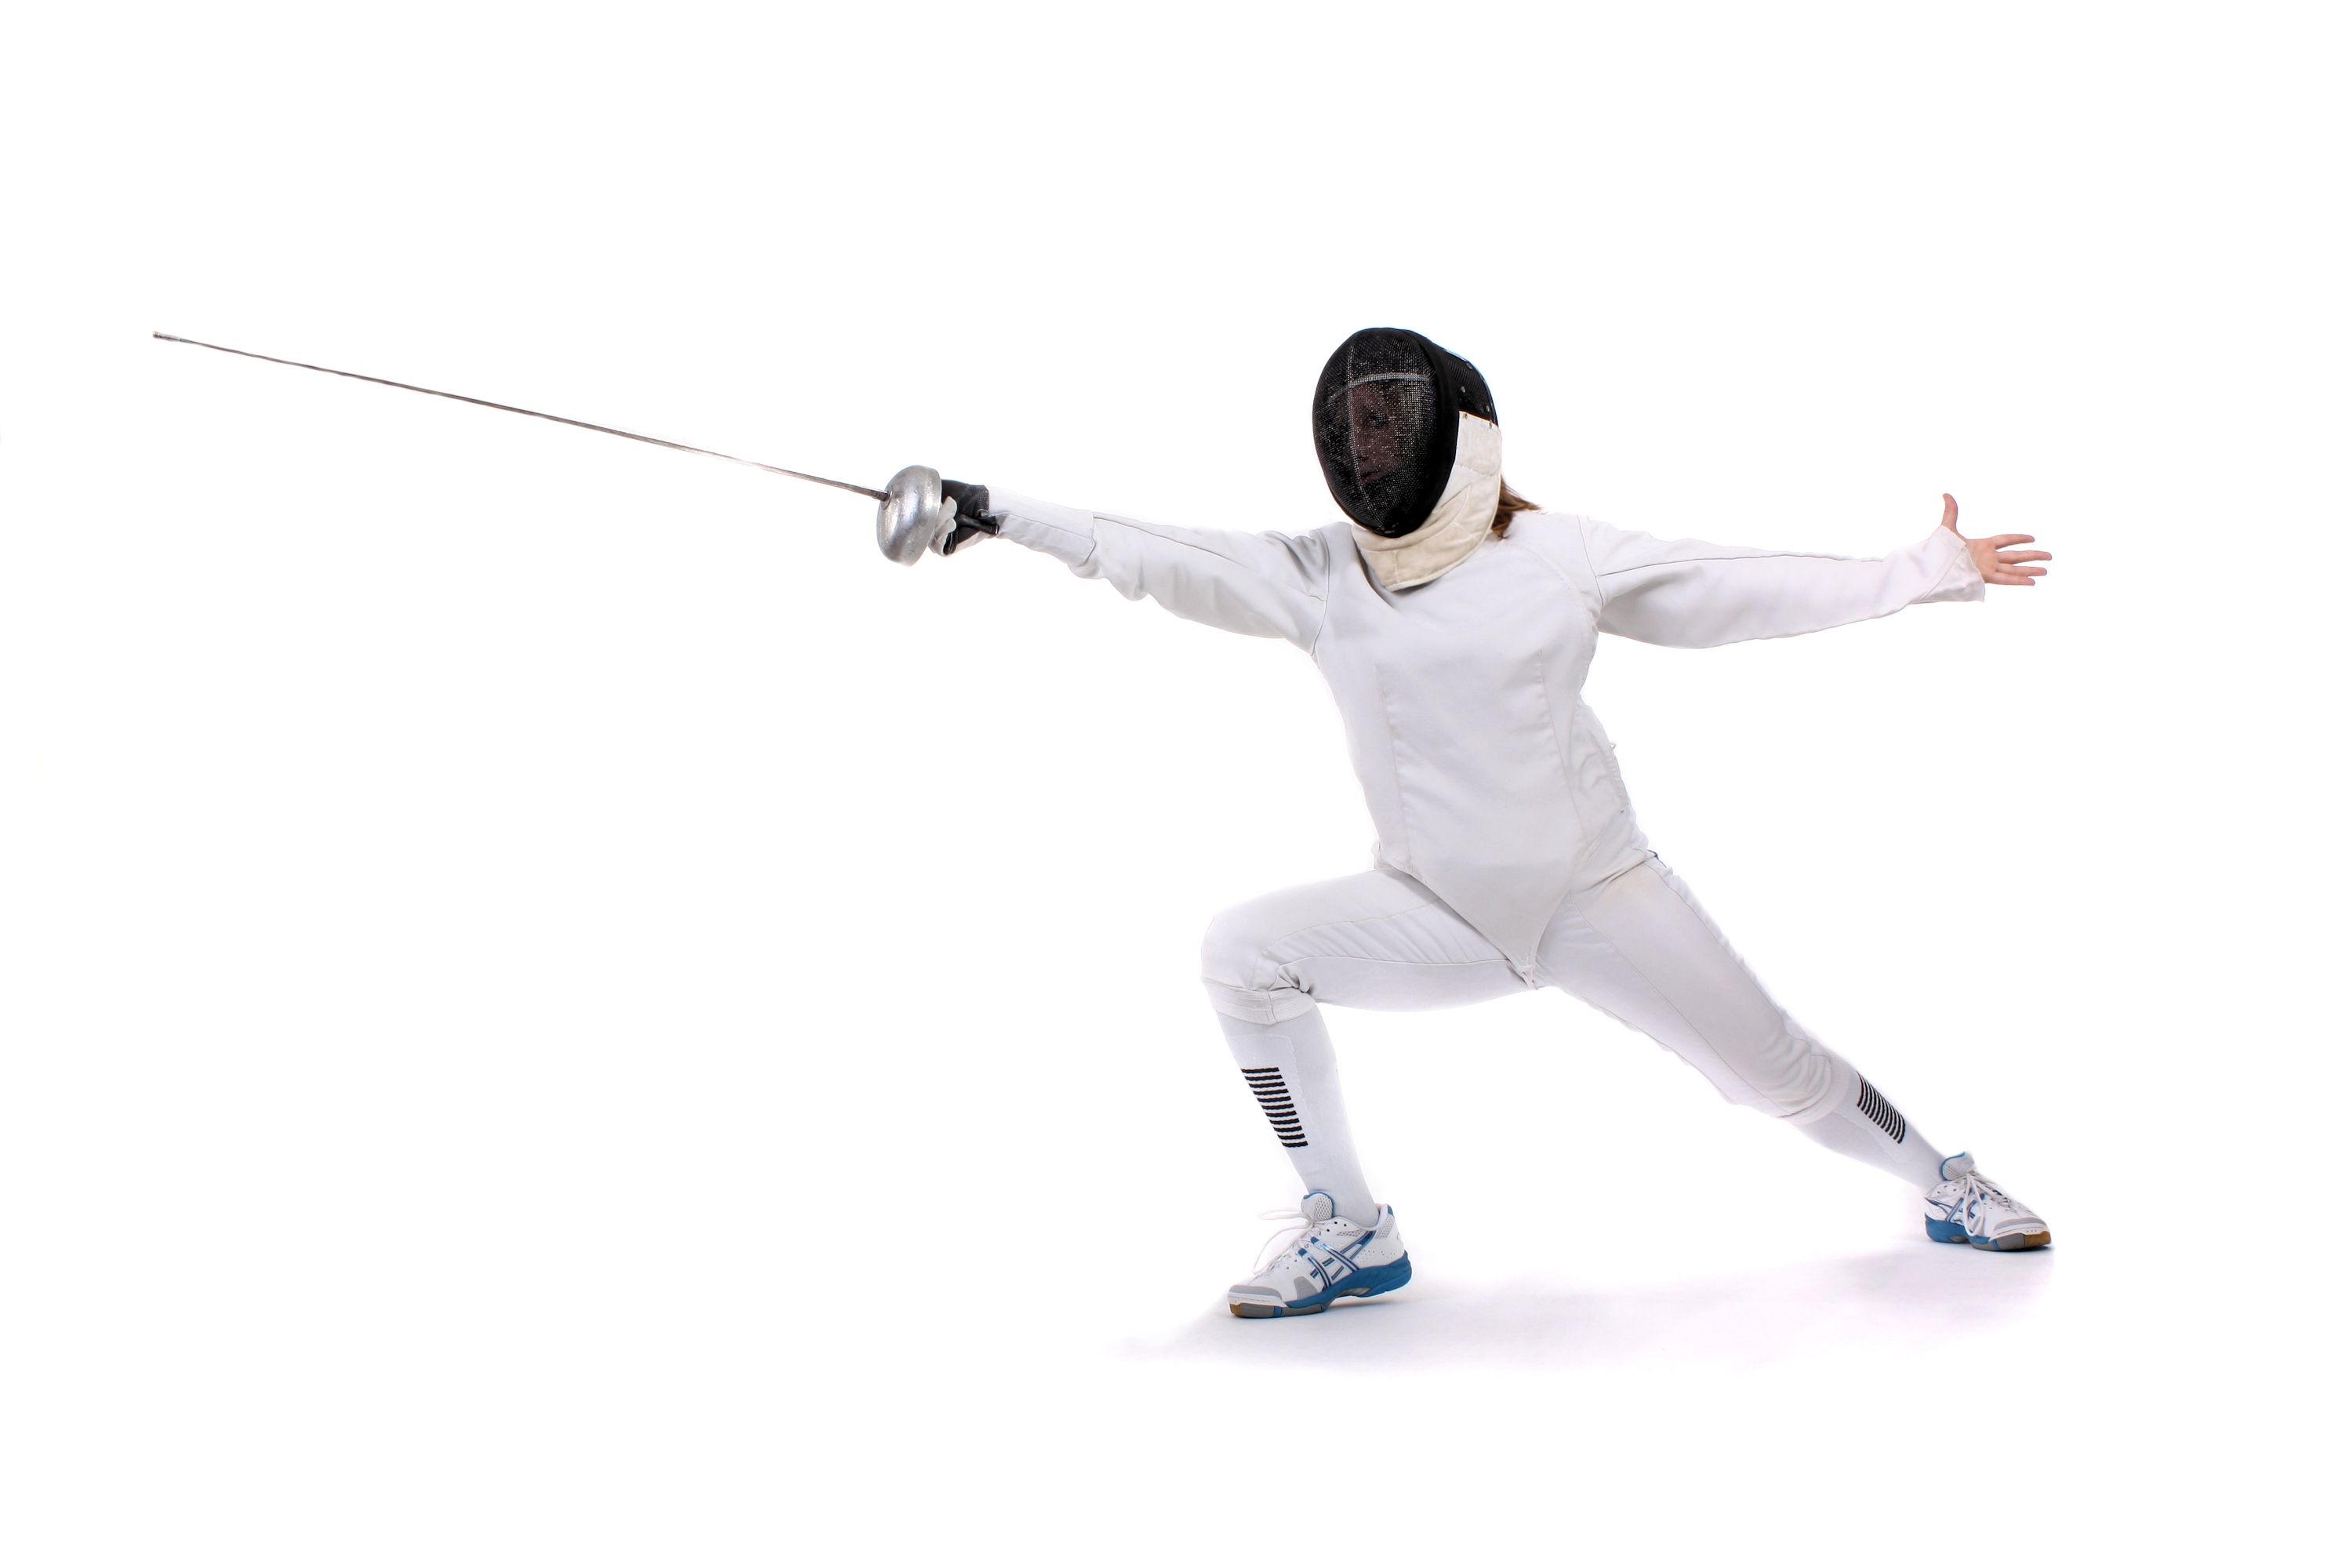 Fencing wallpaper, Sports, HQ Fencing pictureK Wallpaper 2019